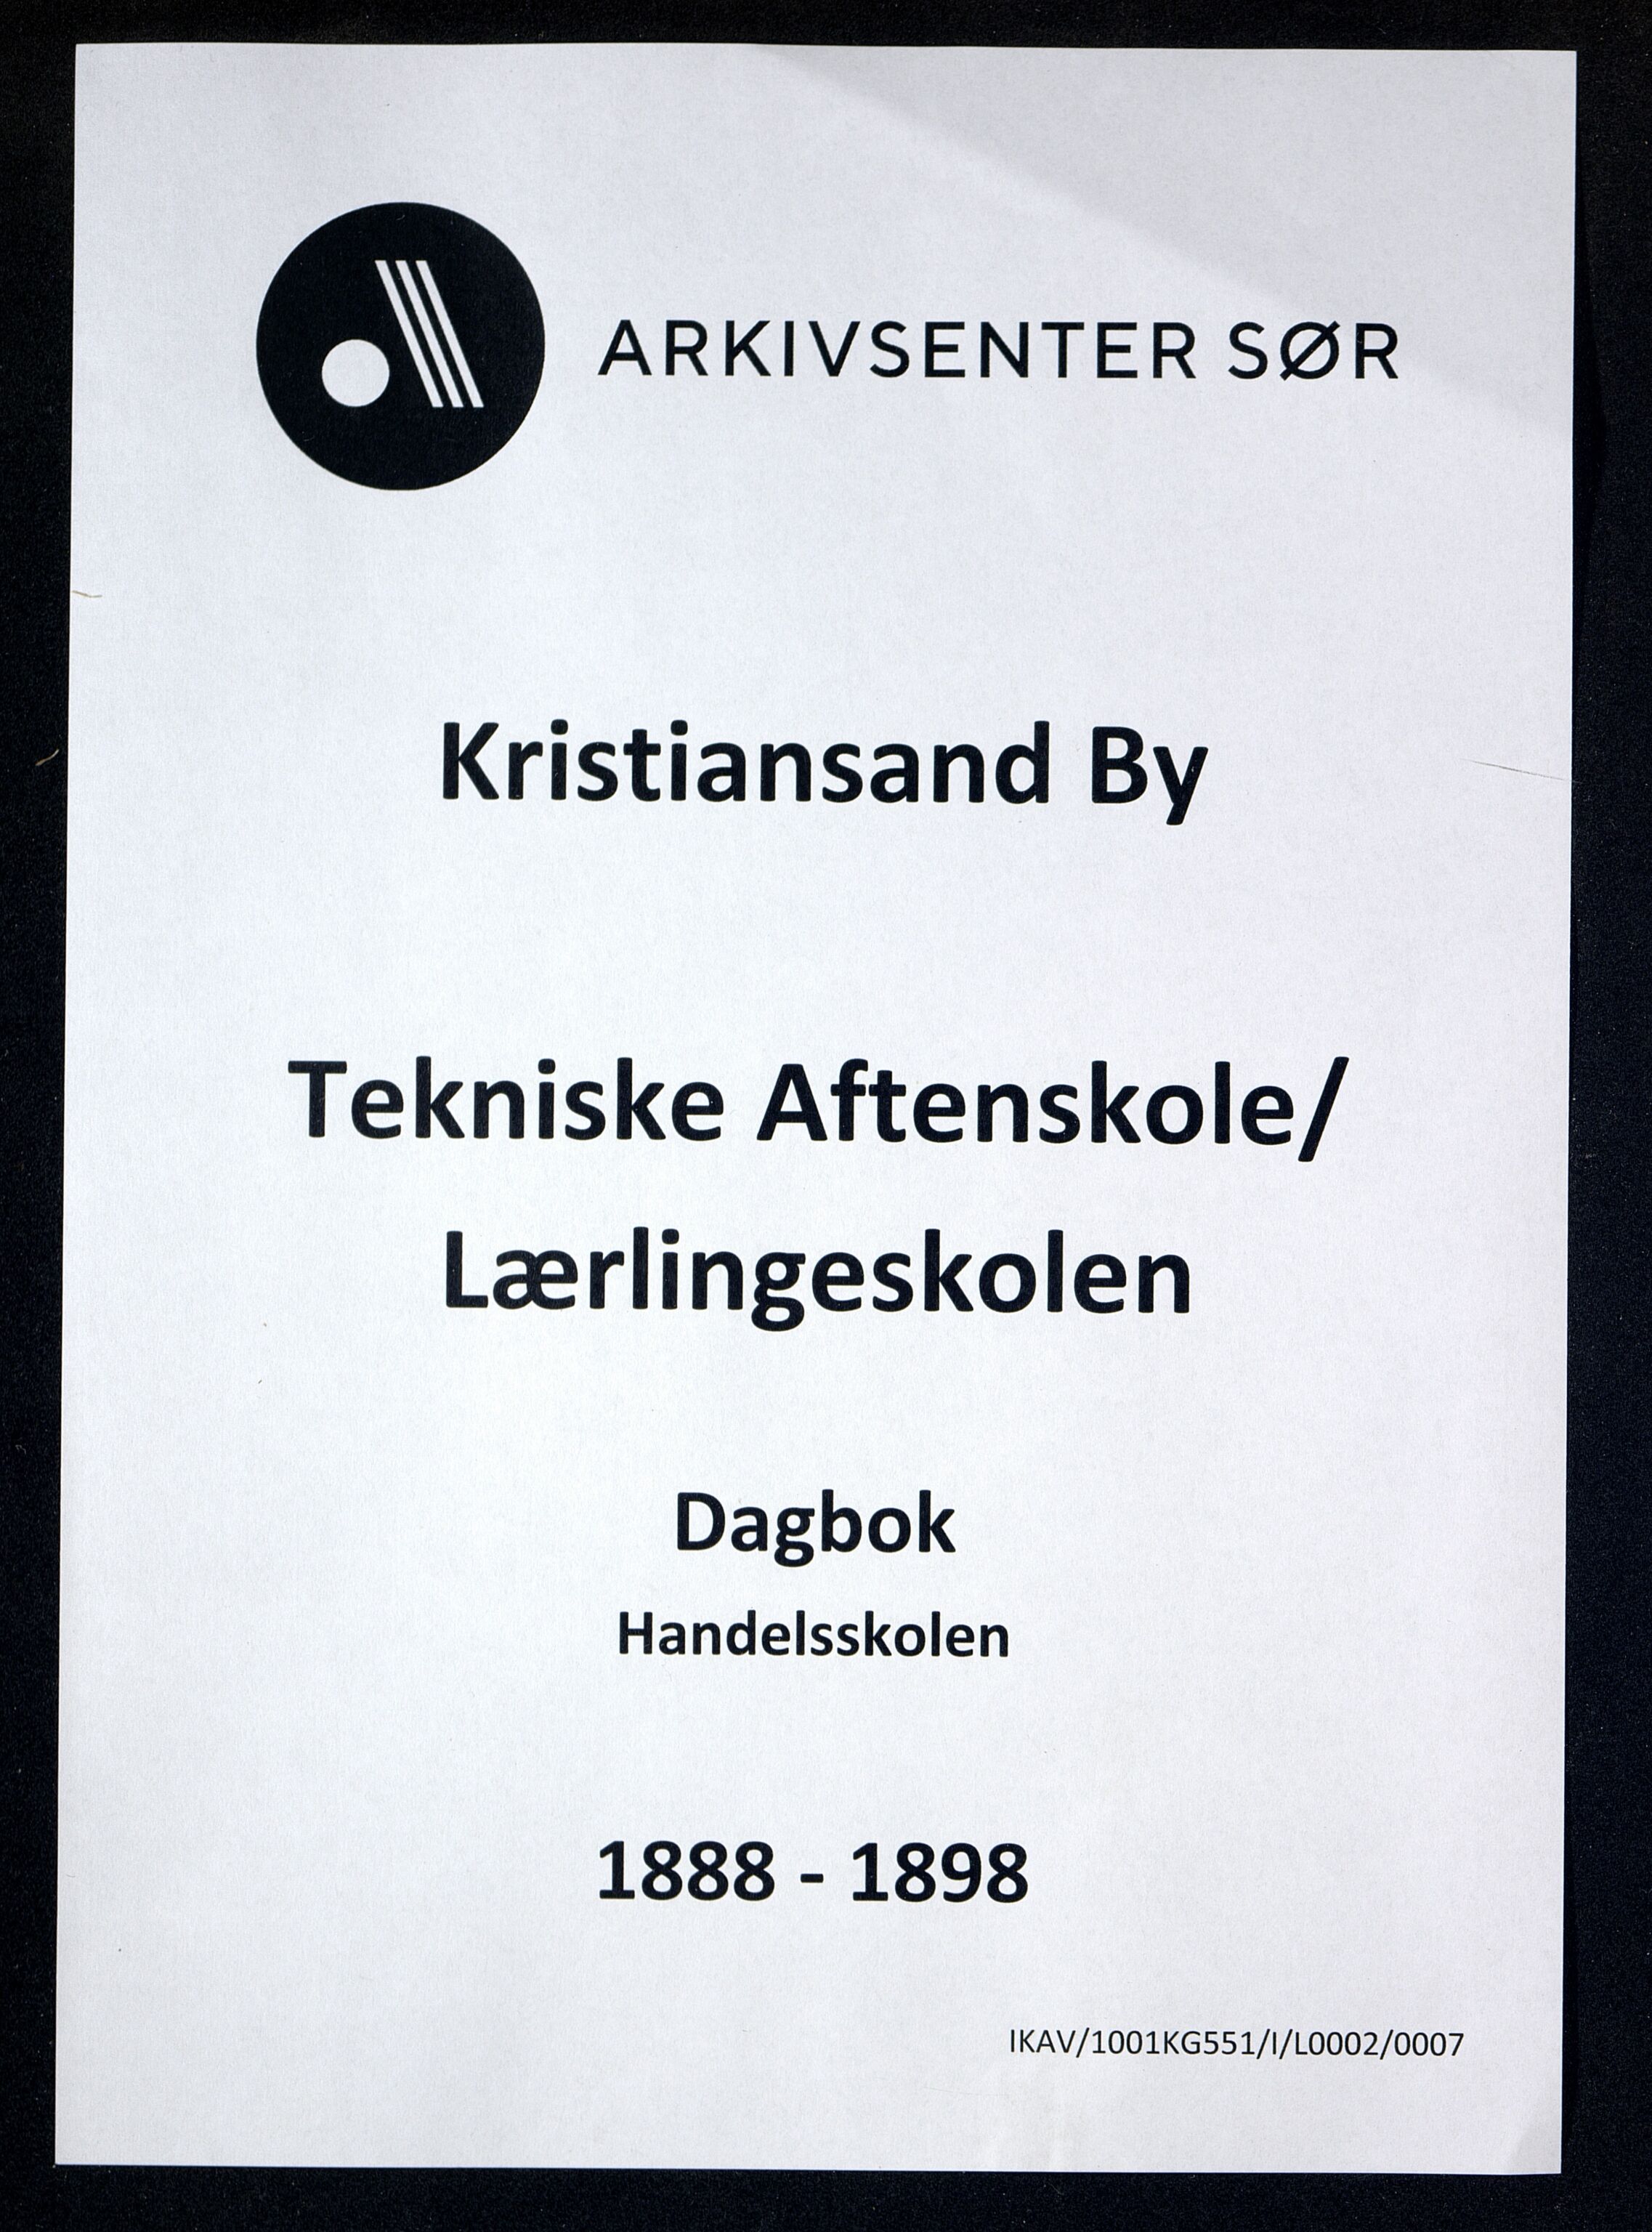 Kristiansand By - Kristiansand Tekniske Aftenskole/Lærlingeskolen, IKAV/1001KG551/I/L0002/0007: Dagbøker / Dagbok, handelsskolen, 1888-1898